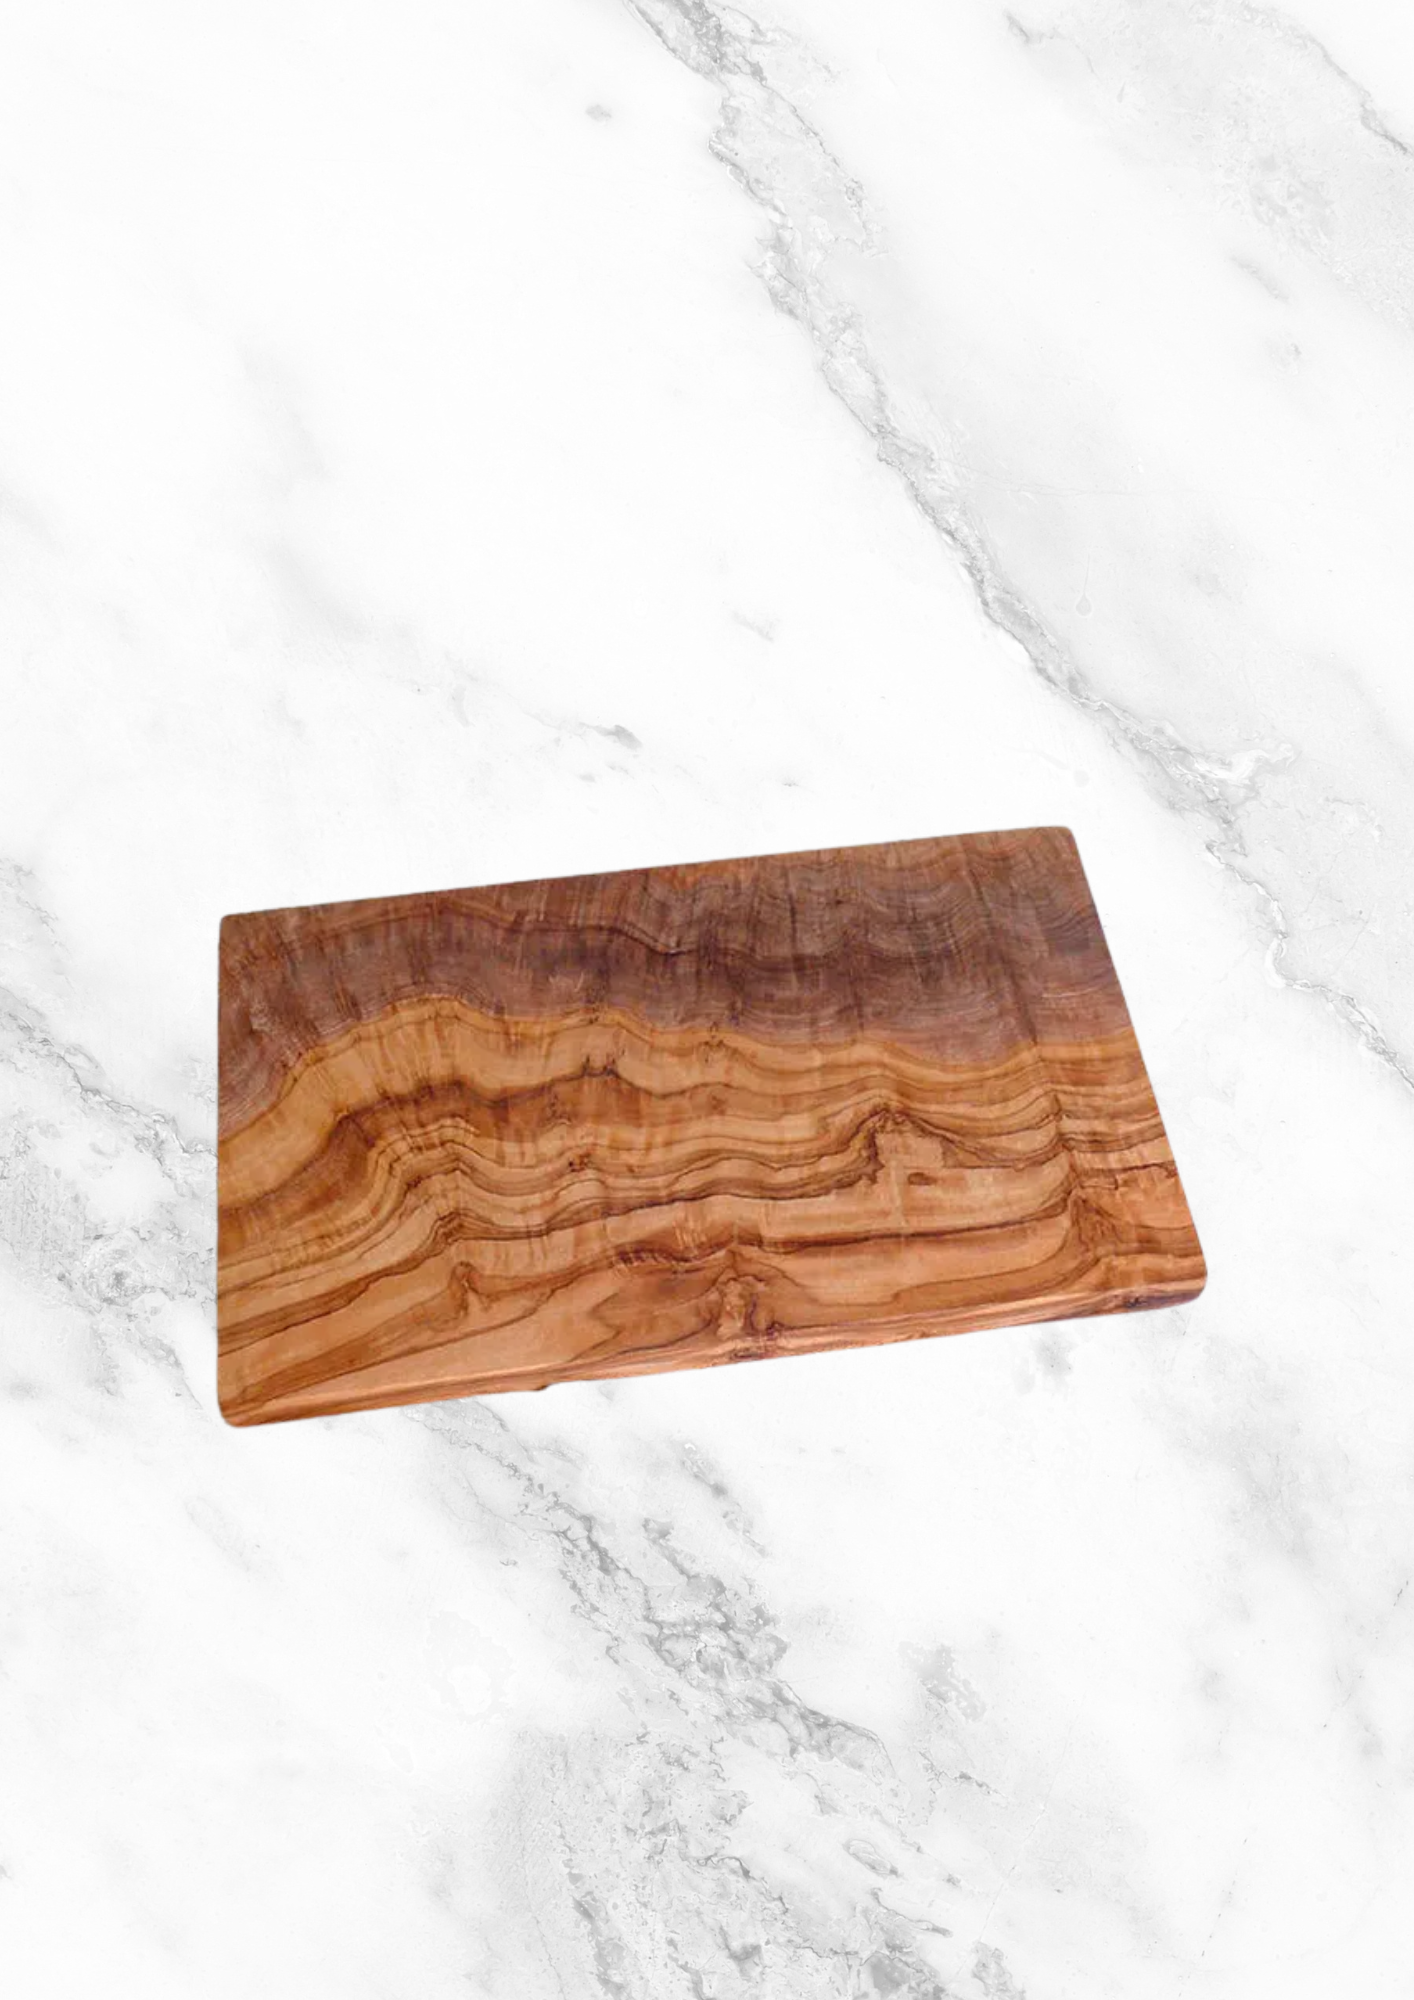 Olive wood smoking board